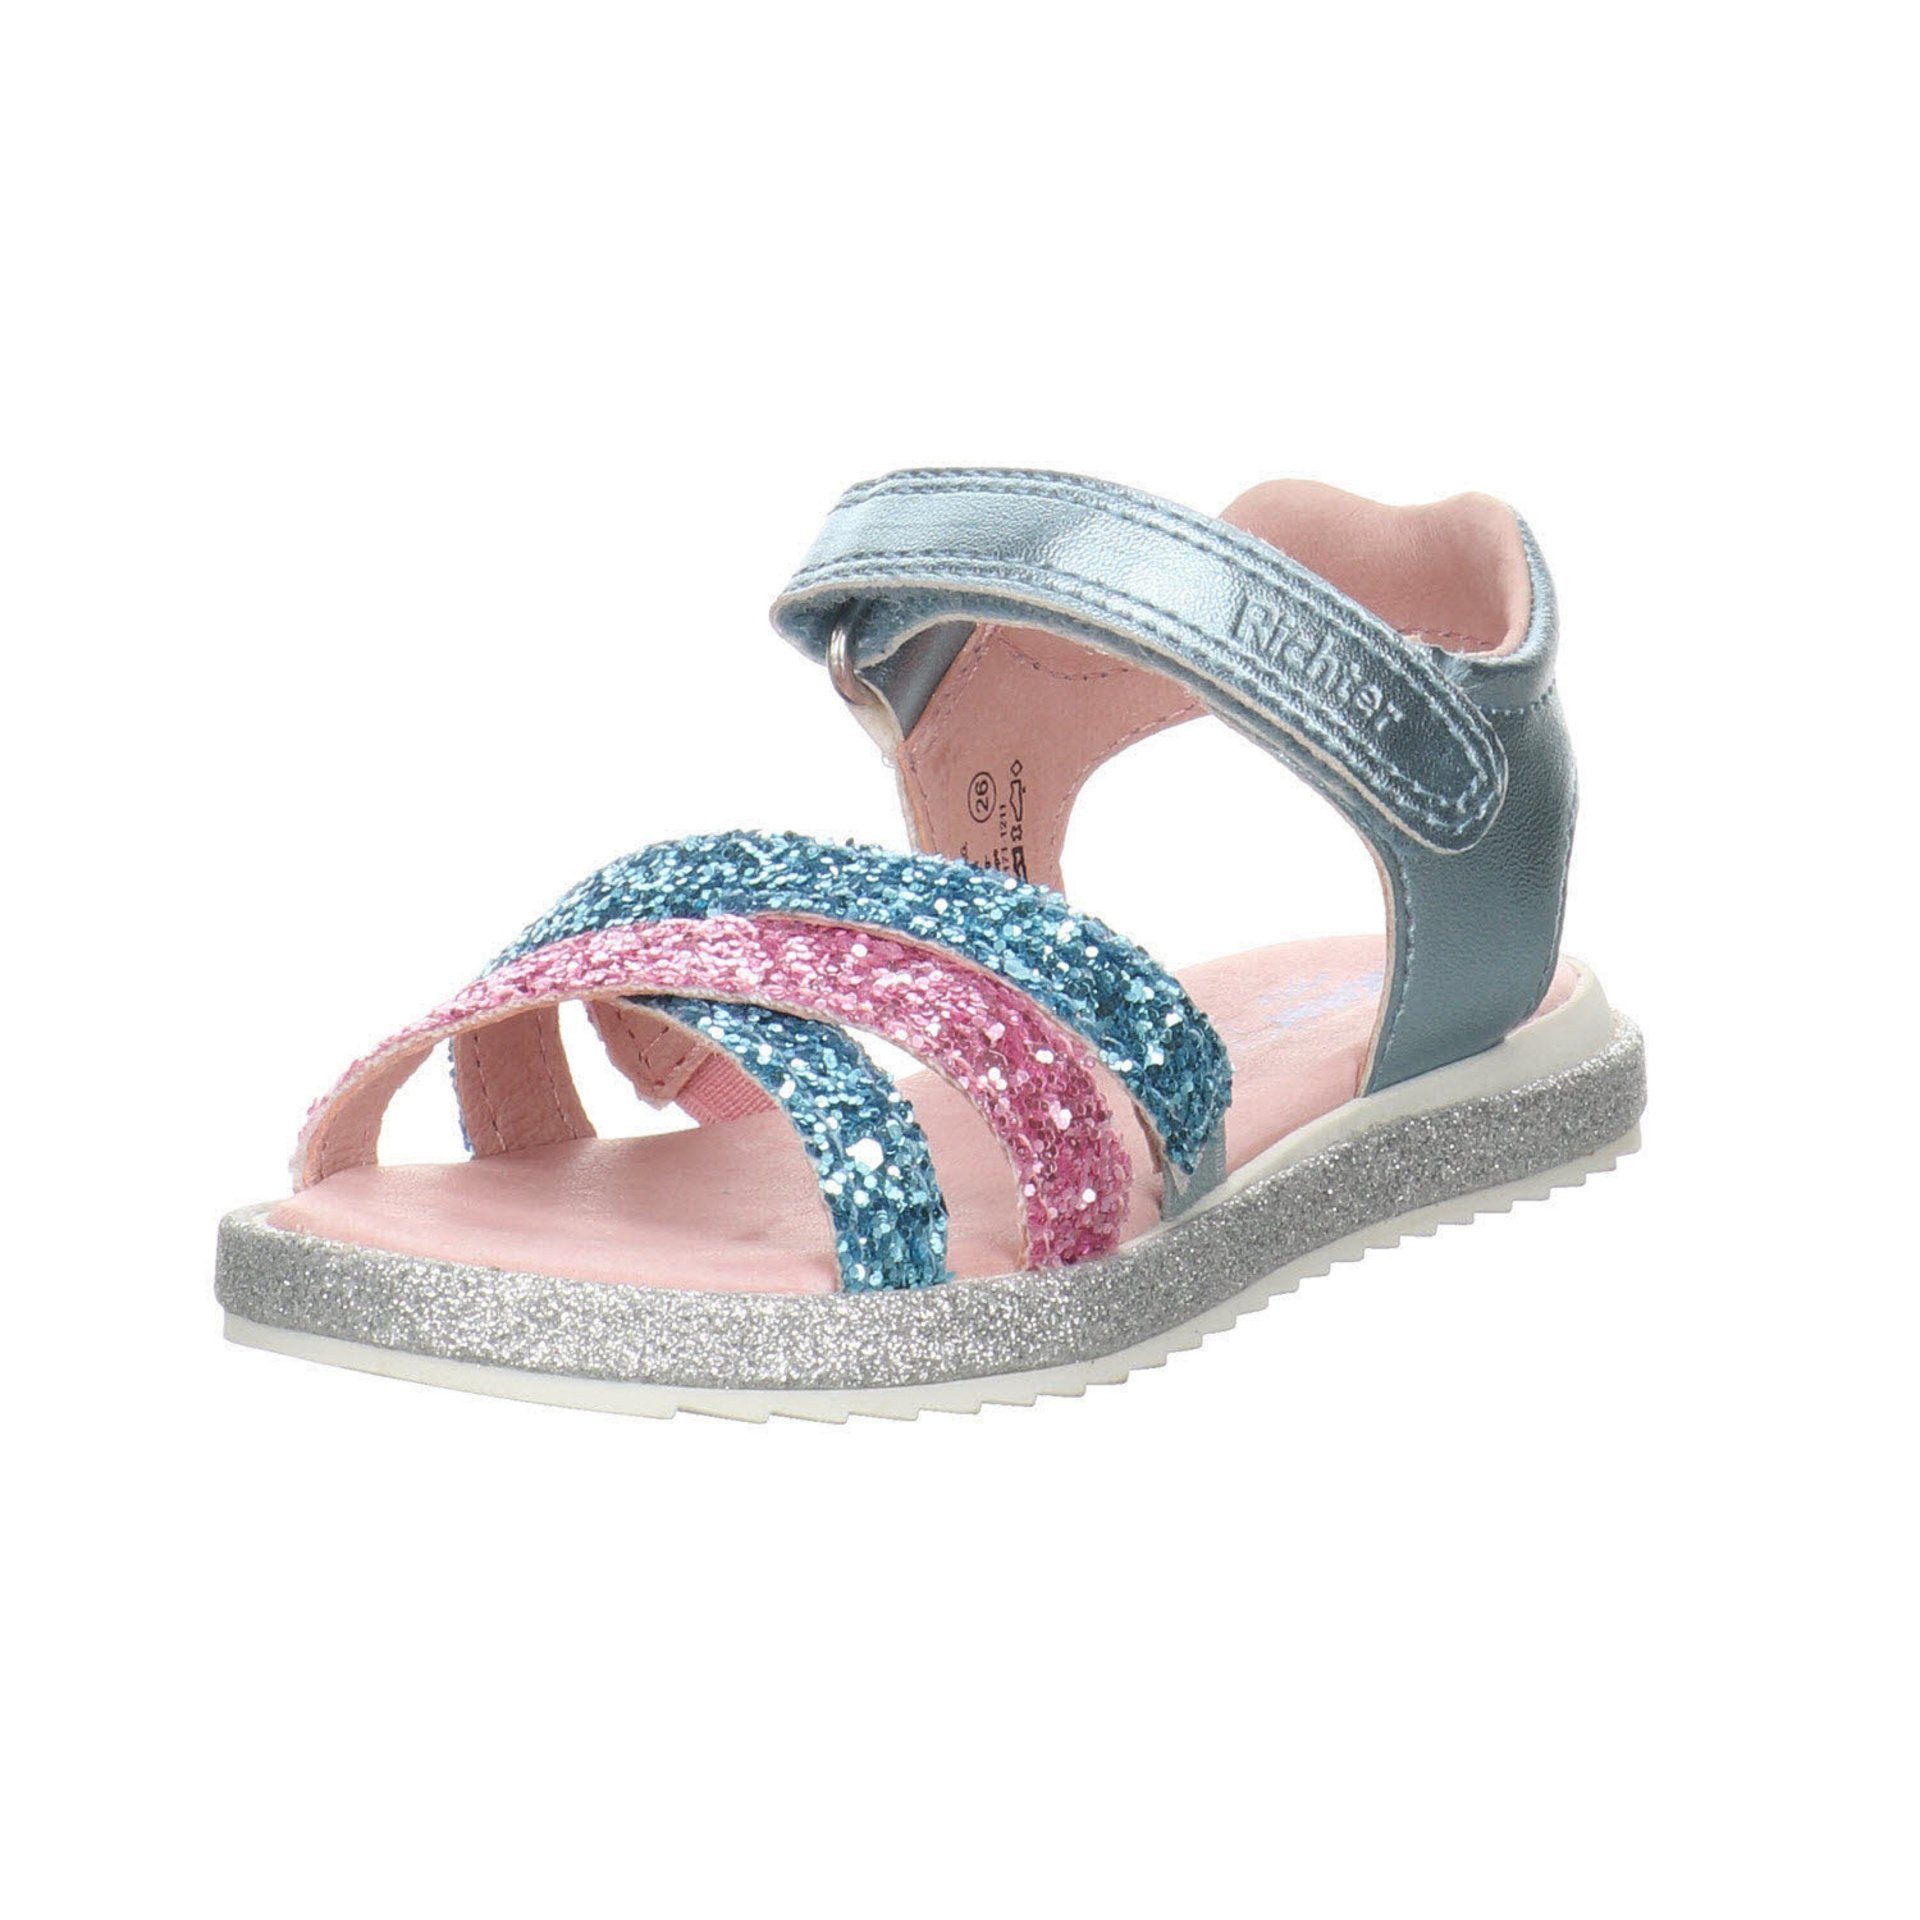 Richter Mädchen Sandalen Schuhe Sandale Kinderschuhe Sandale Lederkombination Blau Pink